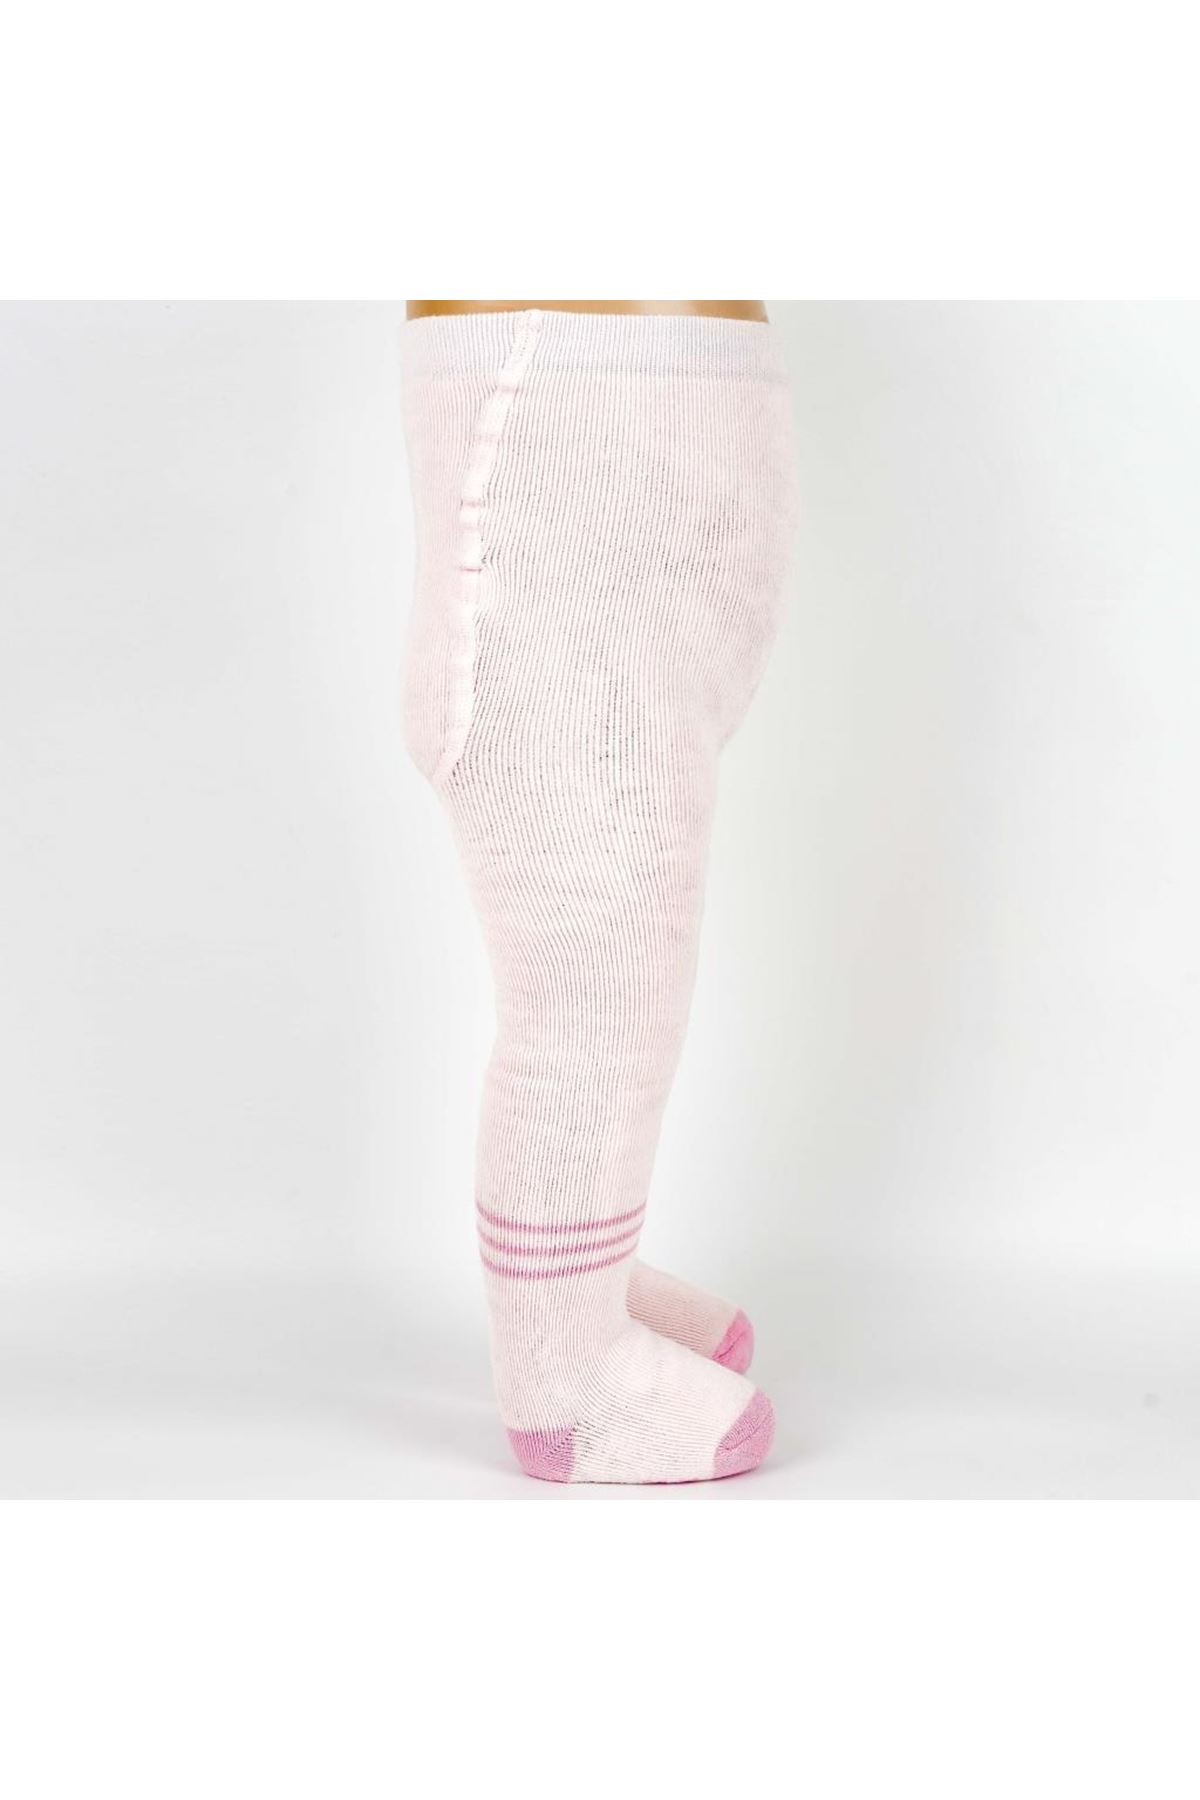 Katamino Ebony Abs'li Havlu Kız Bebek Külotlu Çorap K35099 Asorti